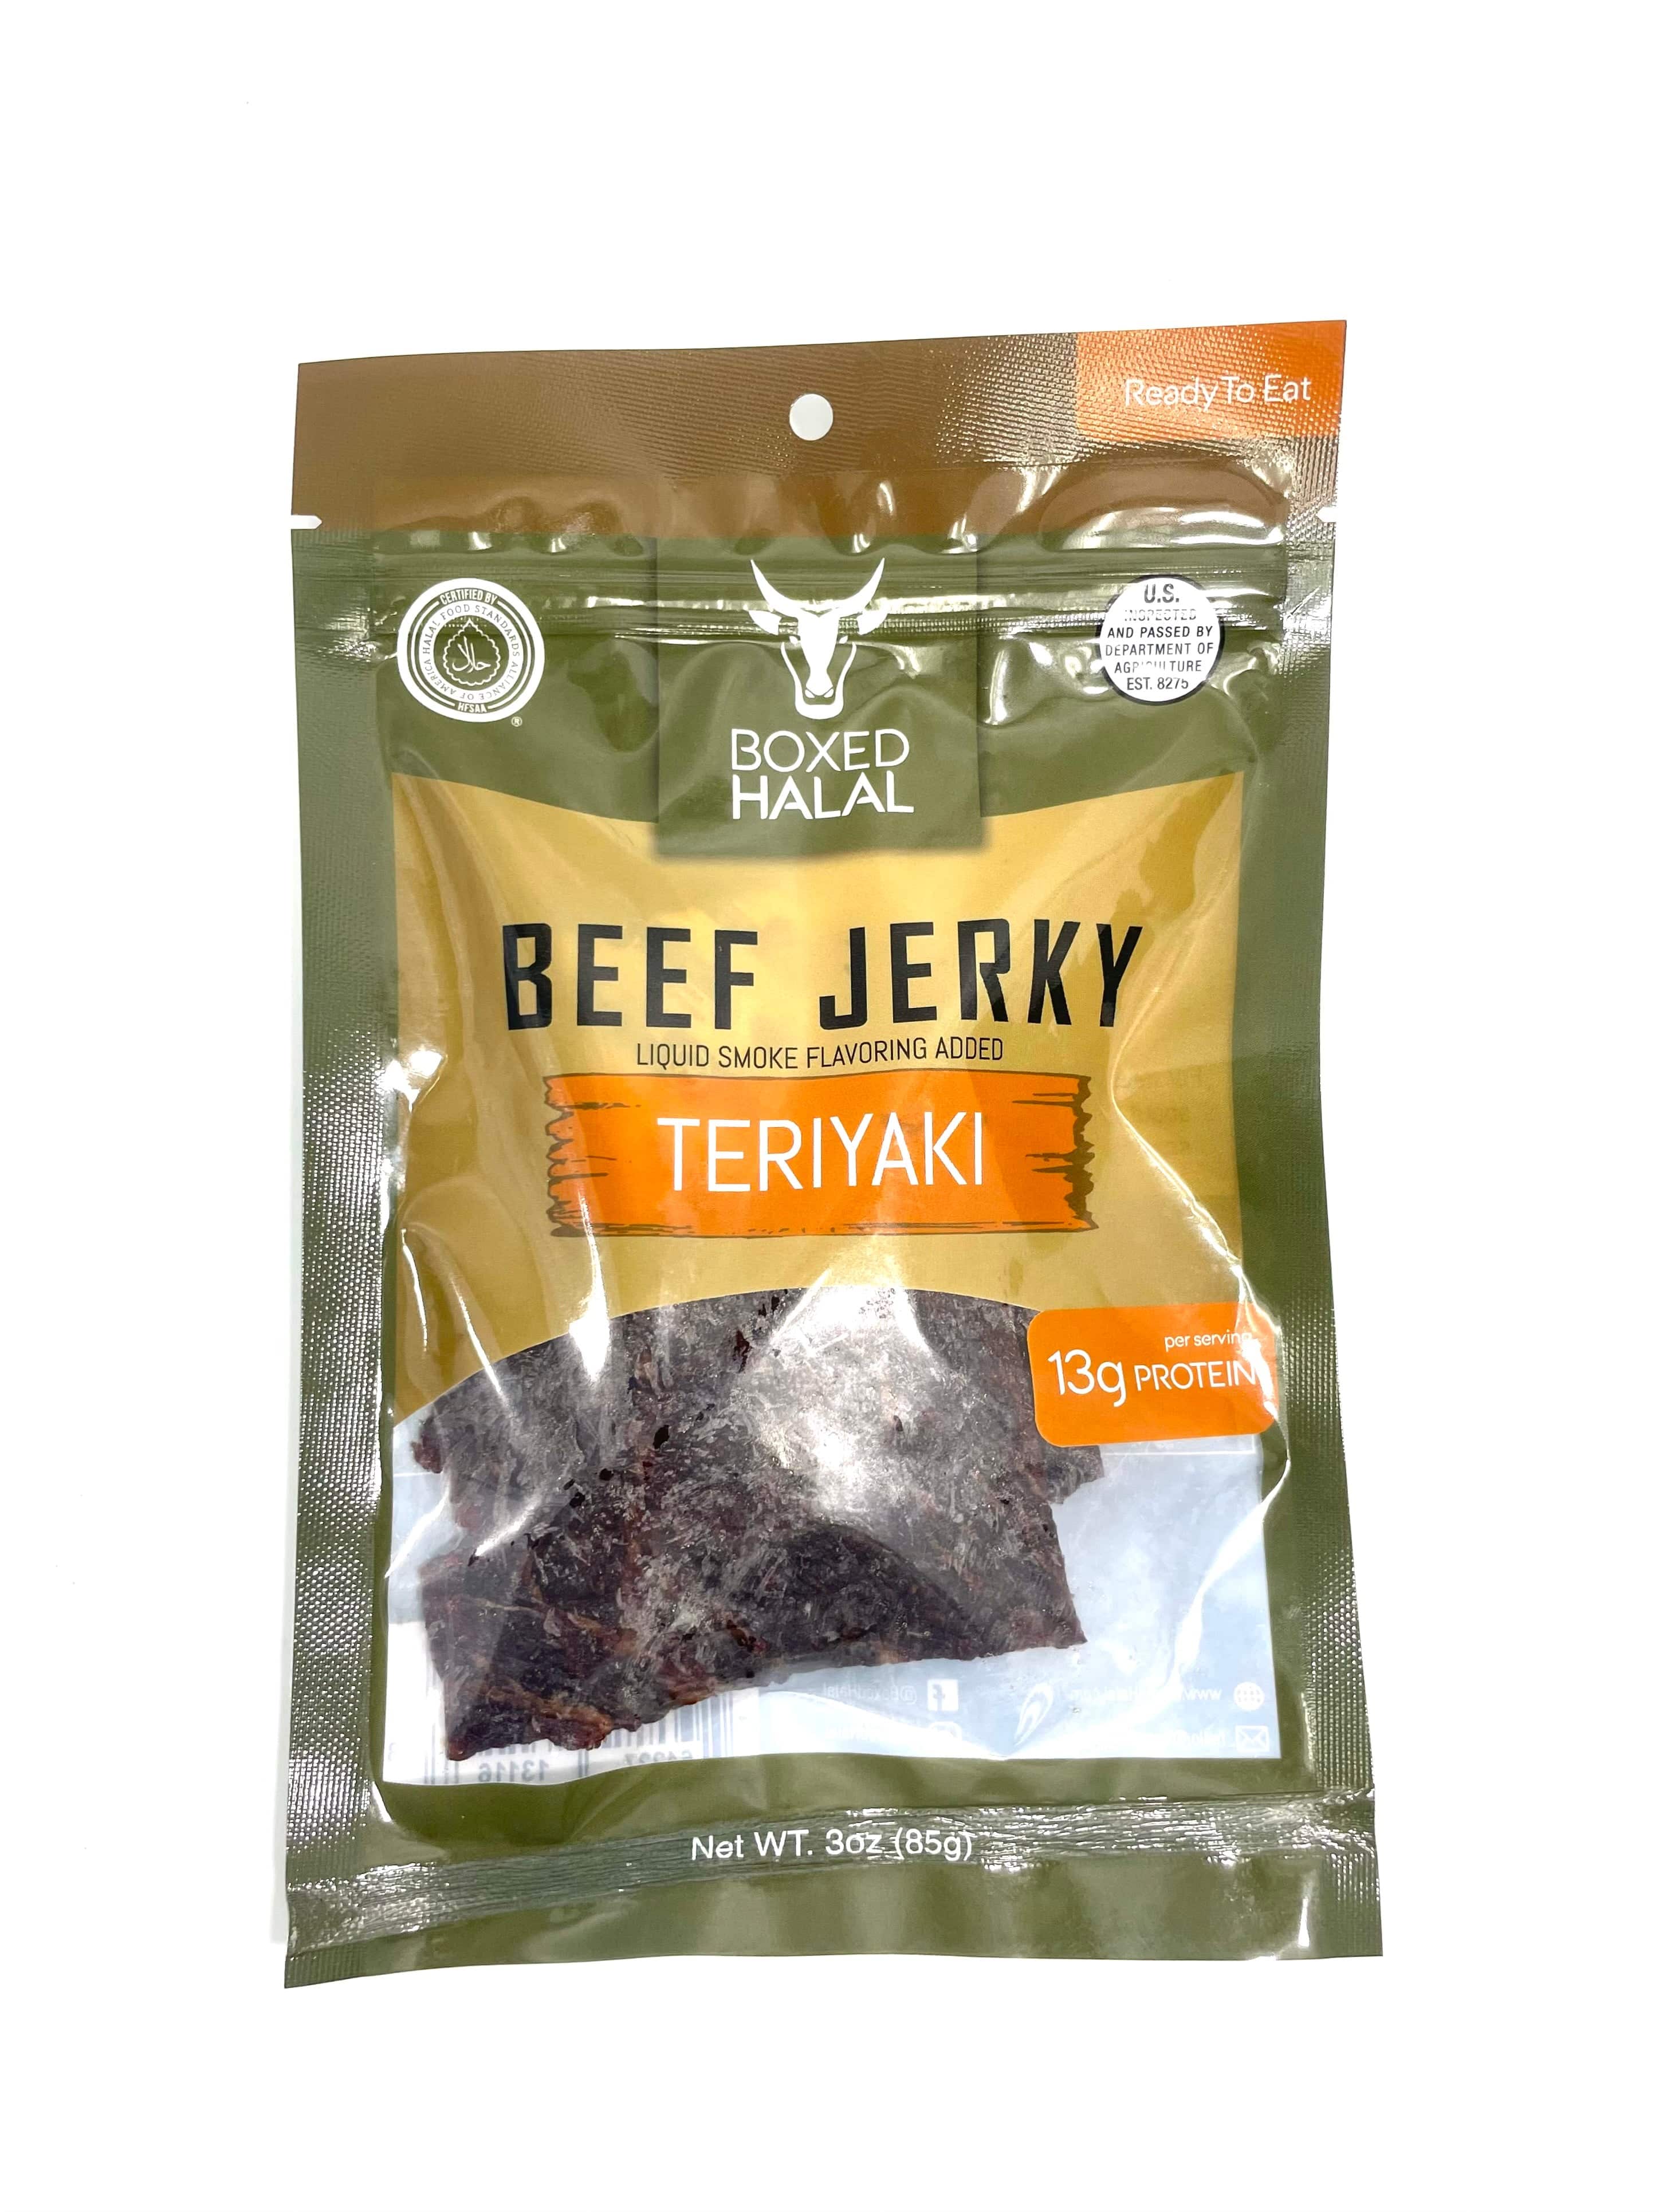 Halal Beef Jerky - 4 NEW Flavors! - Boxed Halal